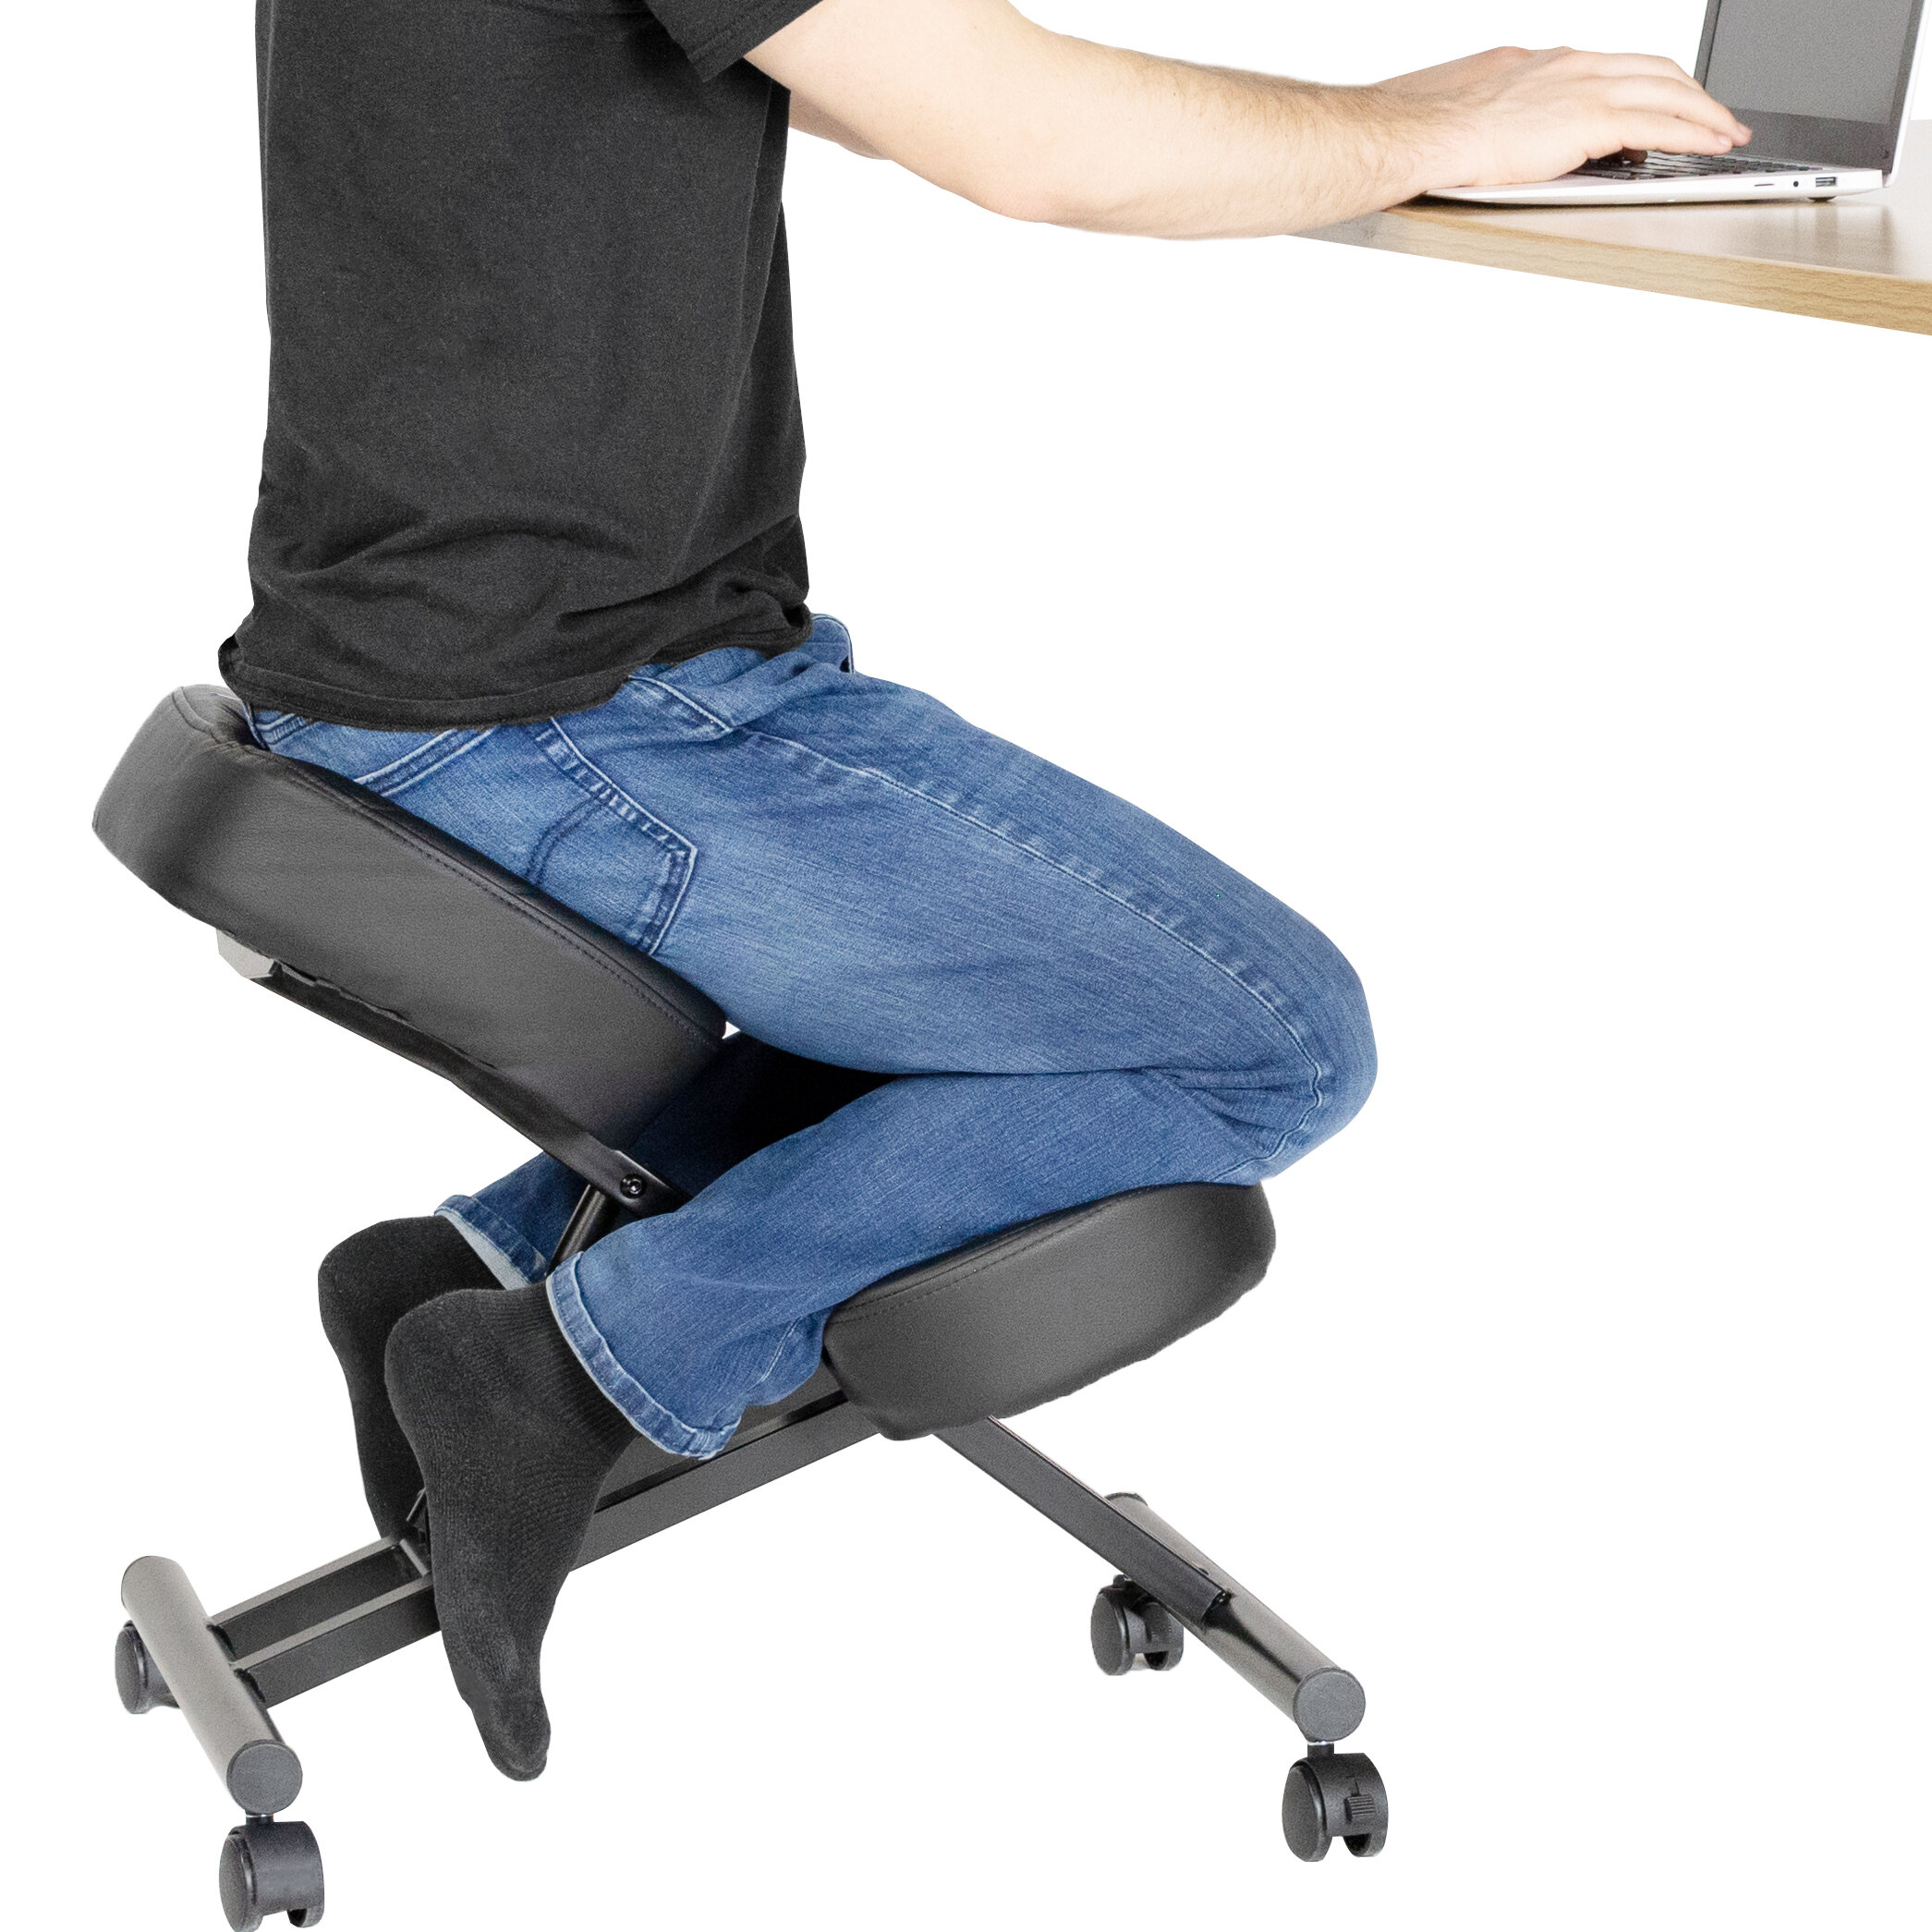 Adjustable Stool for Home and Office VIVO Black Ergonomic Kneeling Chair 